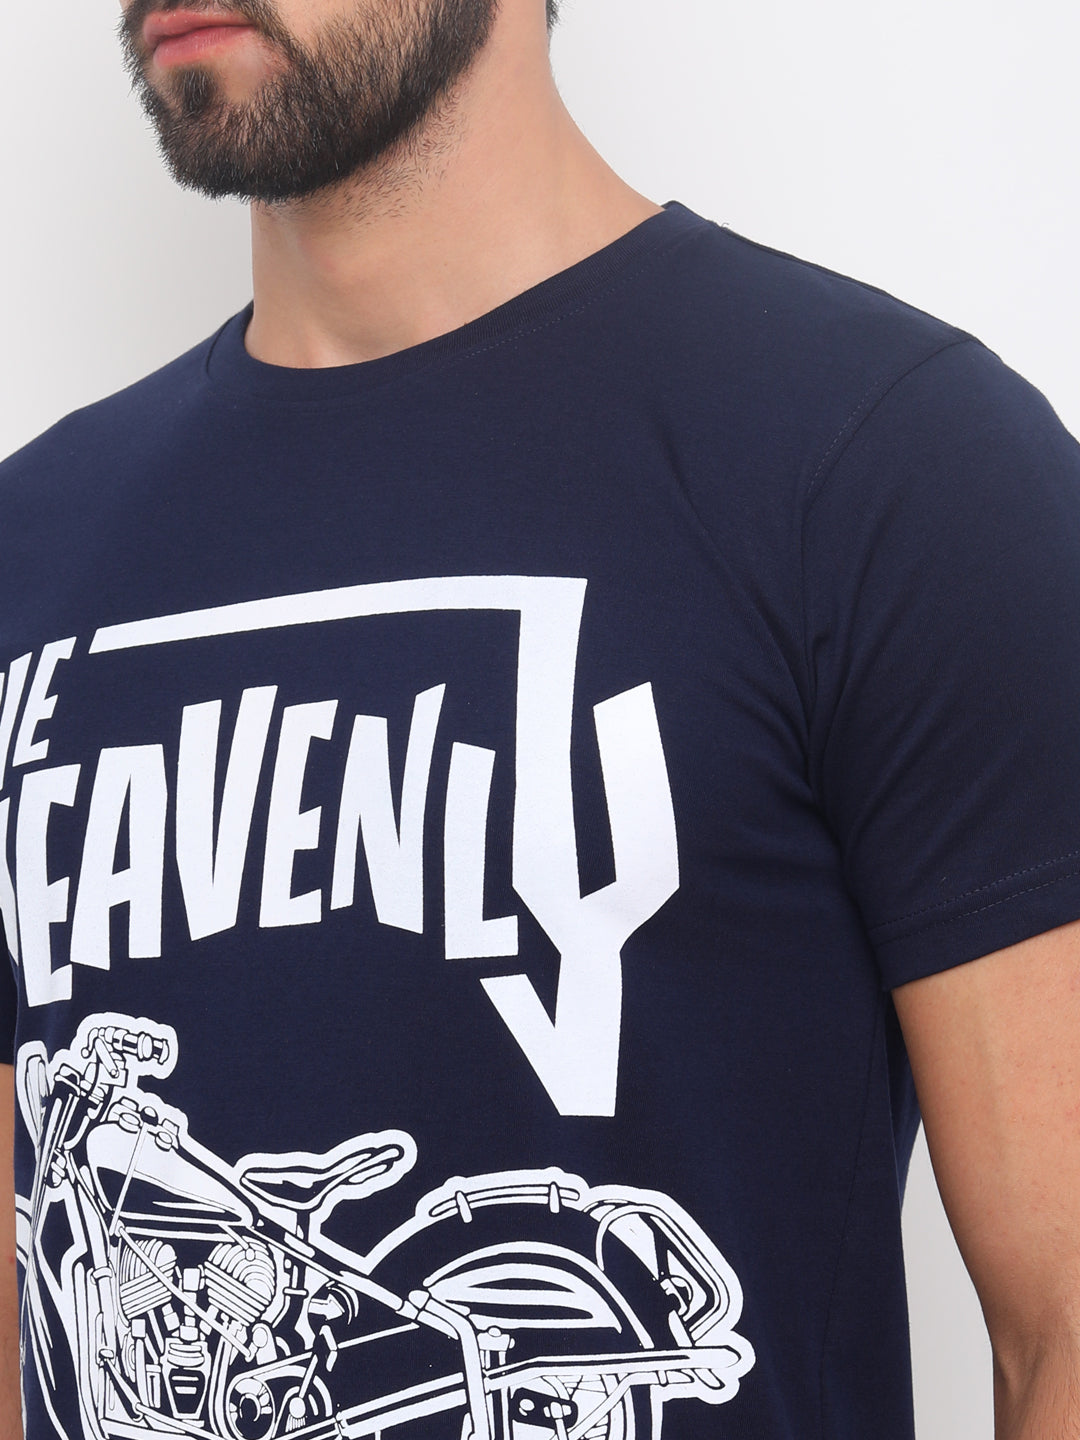 Heavenly Ride T-Shirt Graphic T-Shirts Bushirt   